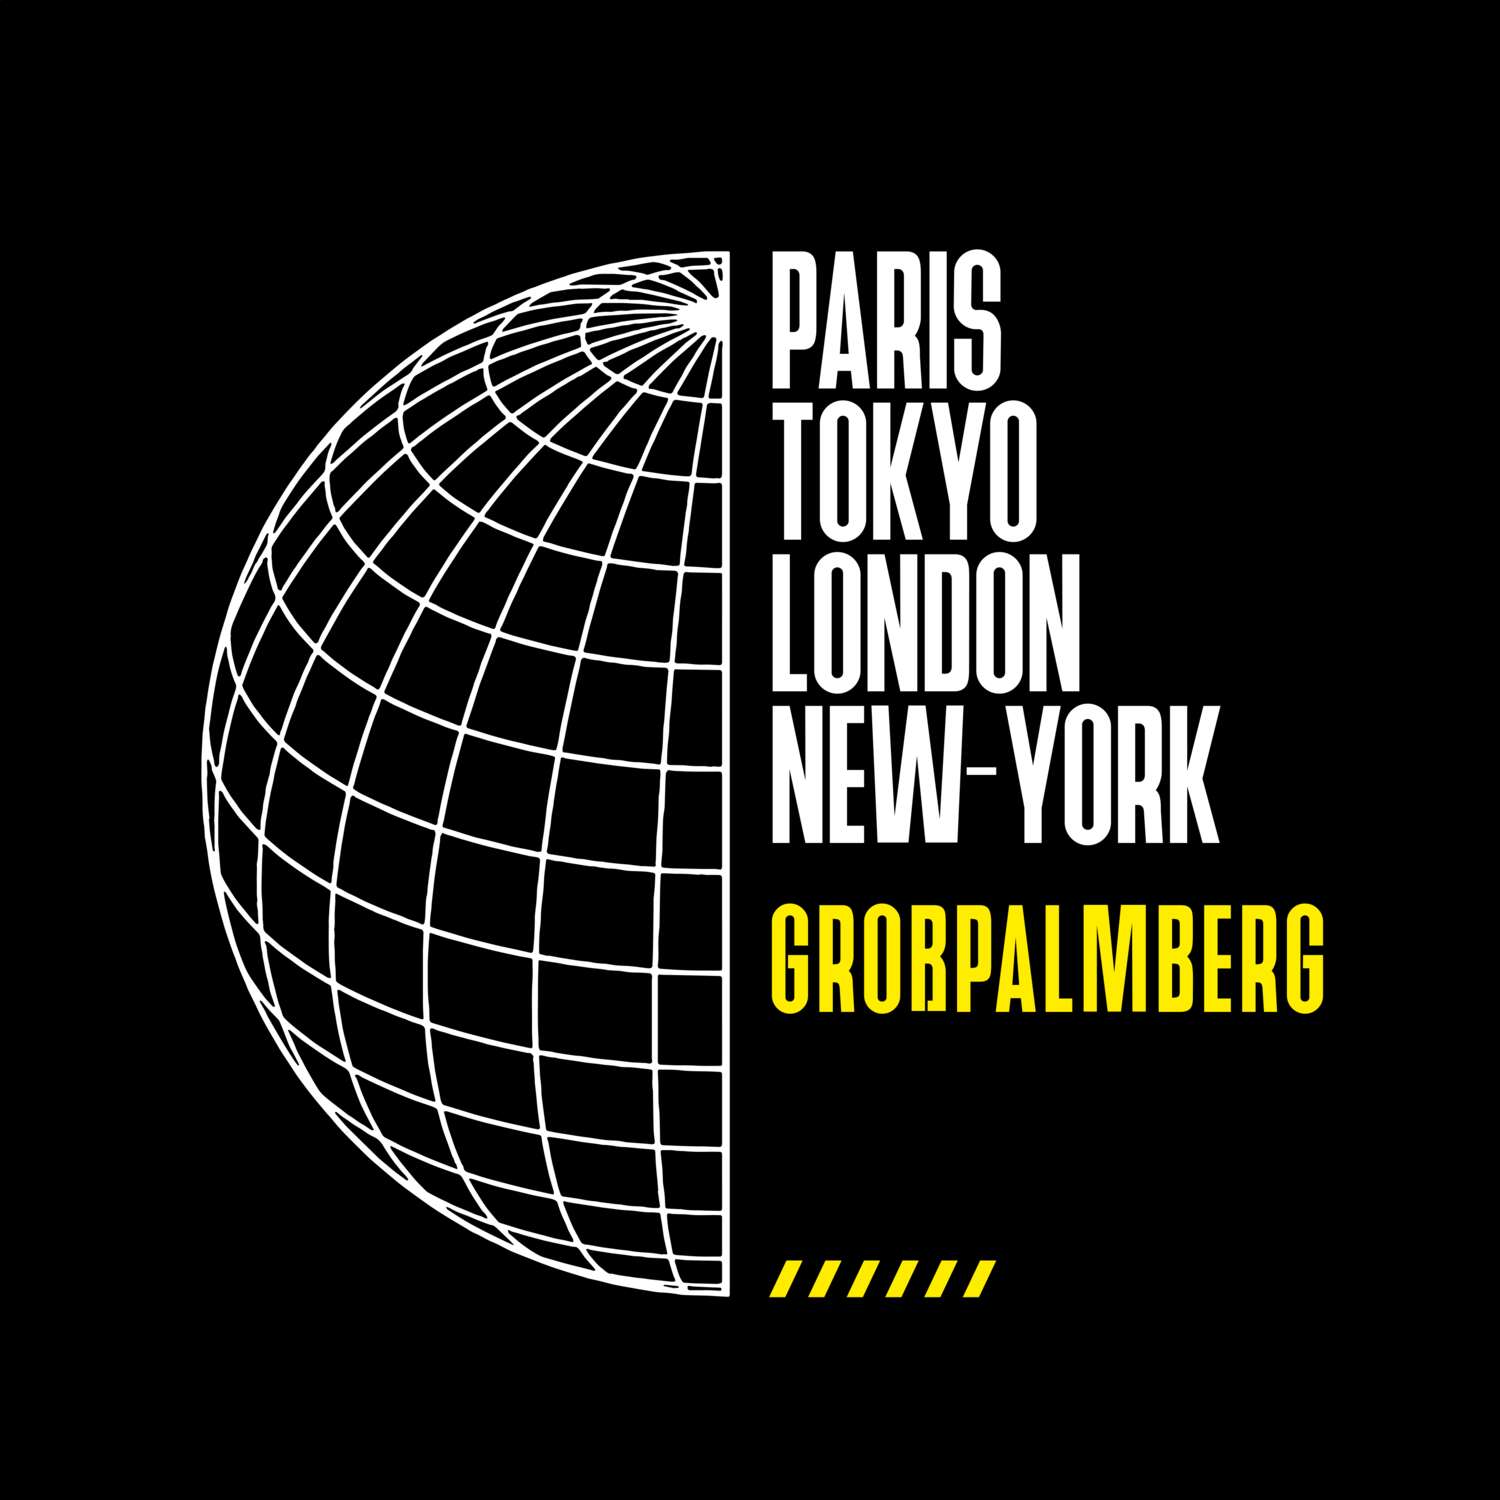 Großpalmberg T-Shirt »Paris Tokyo London«